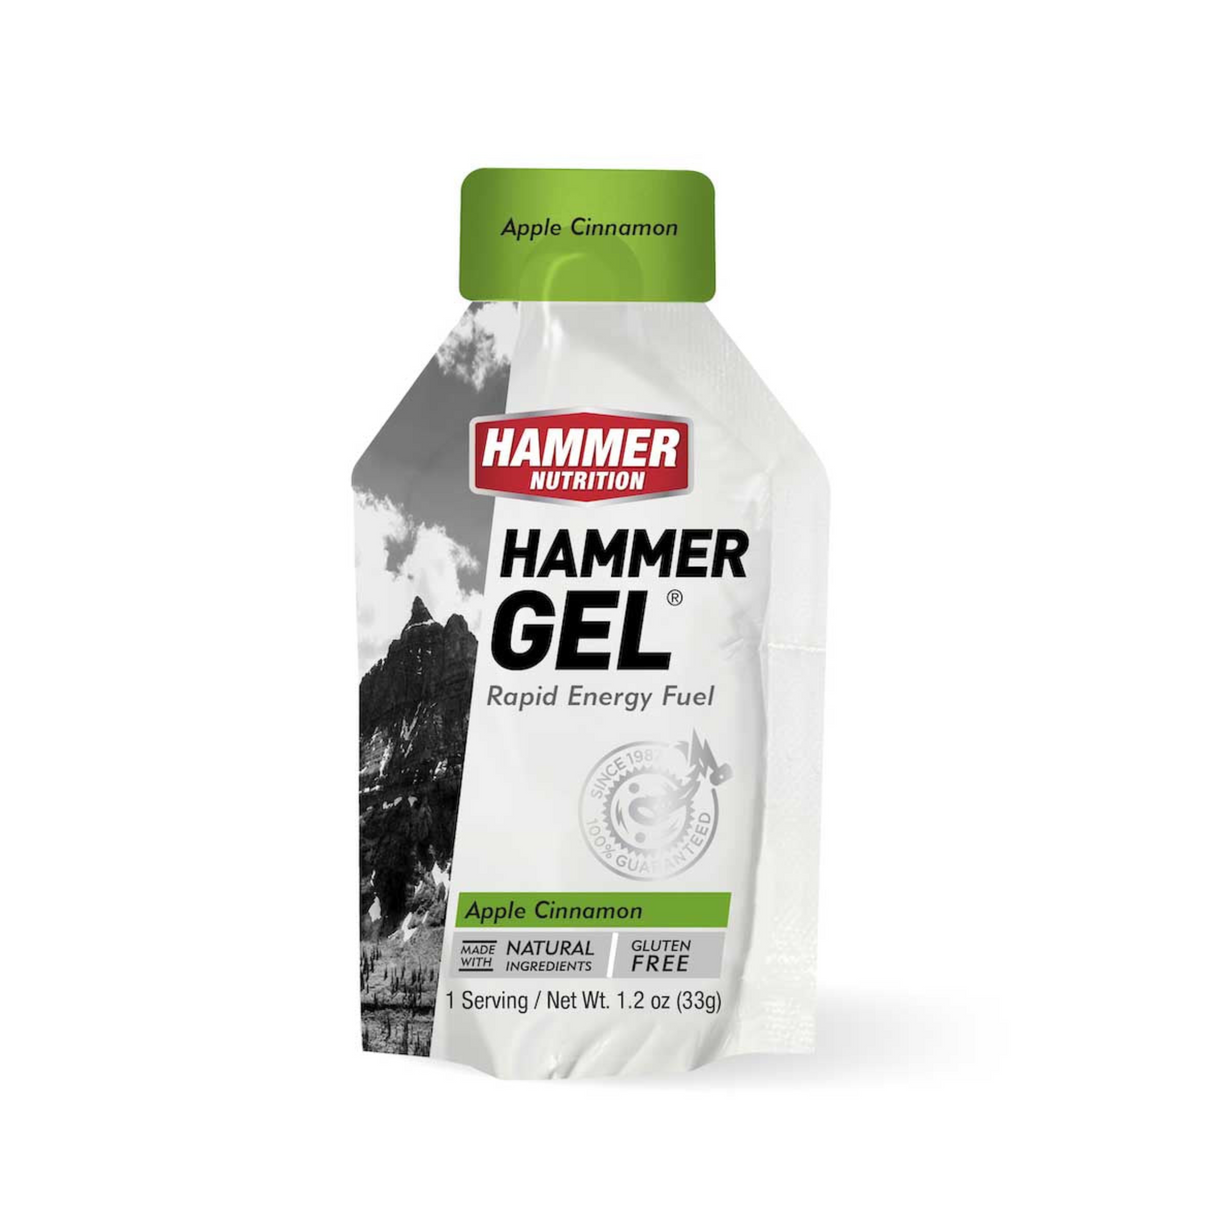 Hammer Nutrition Gel (Rapid Energy Fuel)